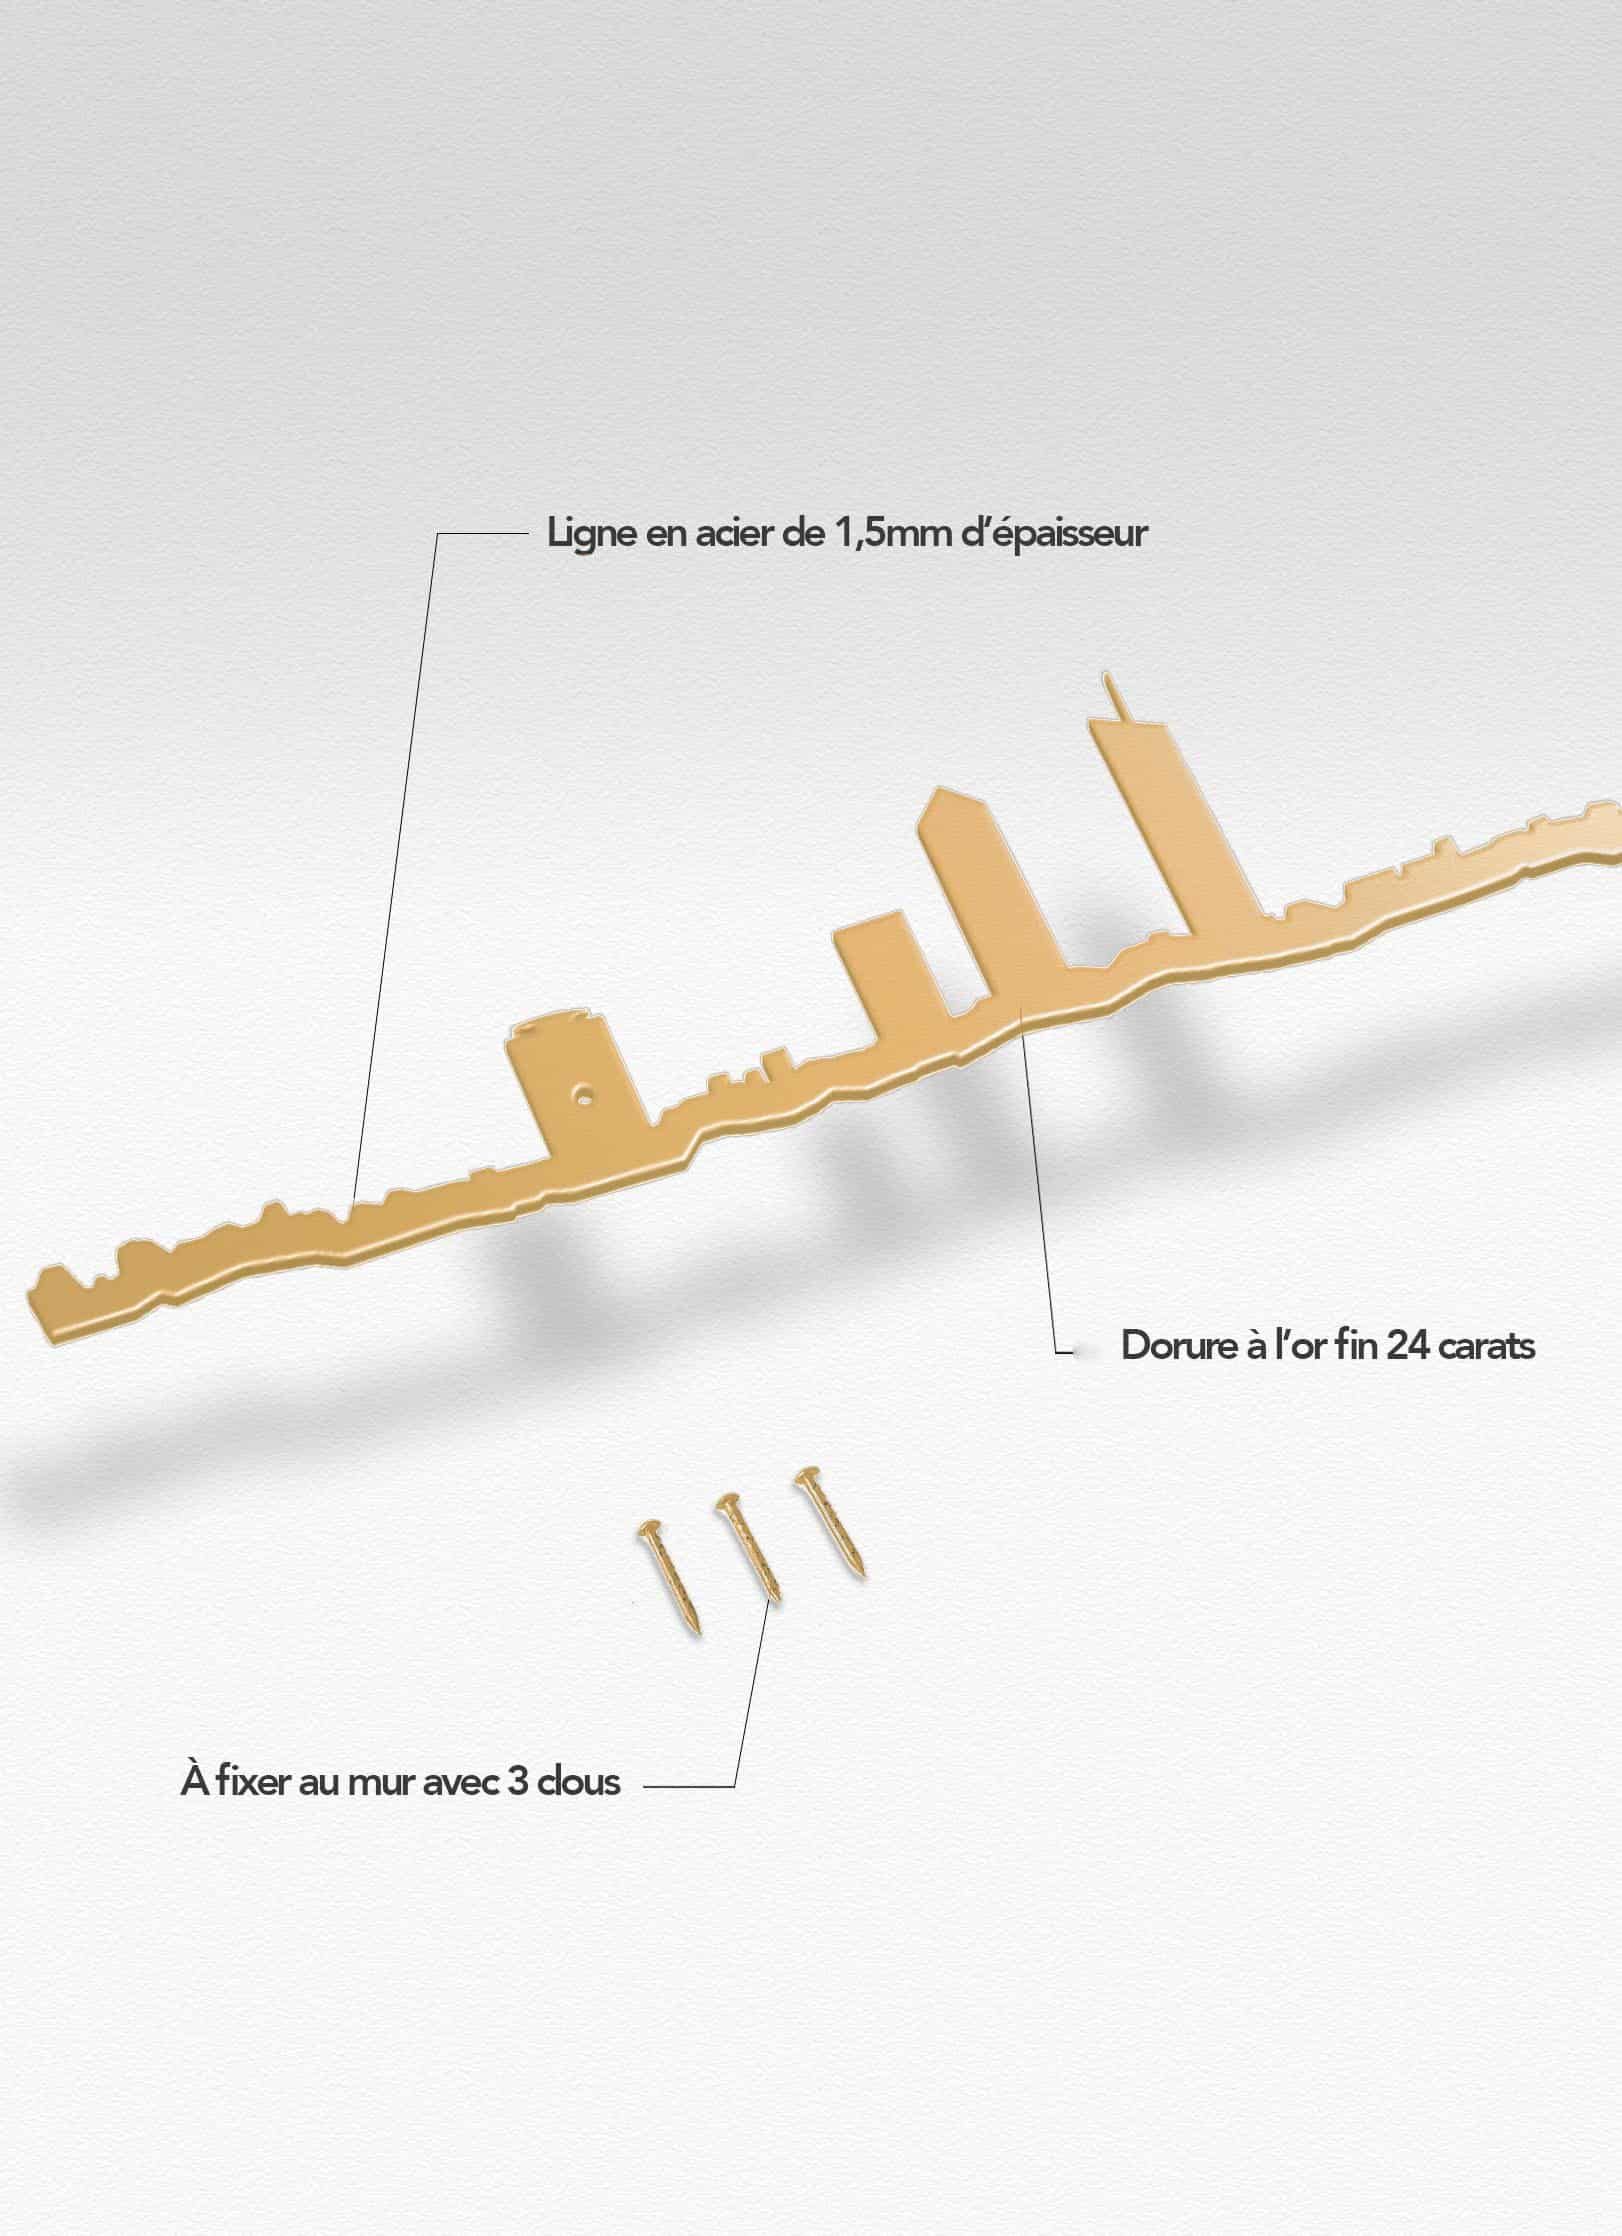 Presentation of the skyline of Lyon doré